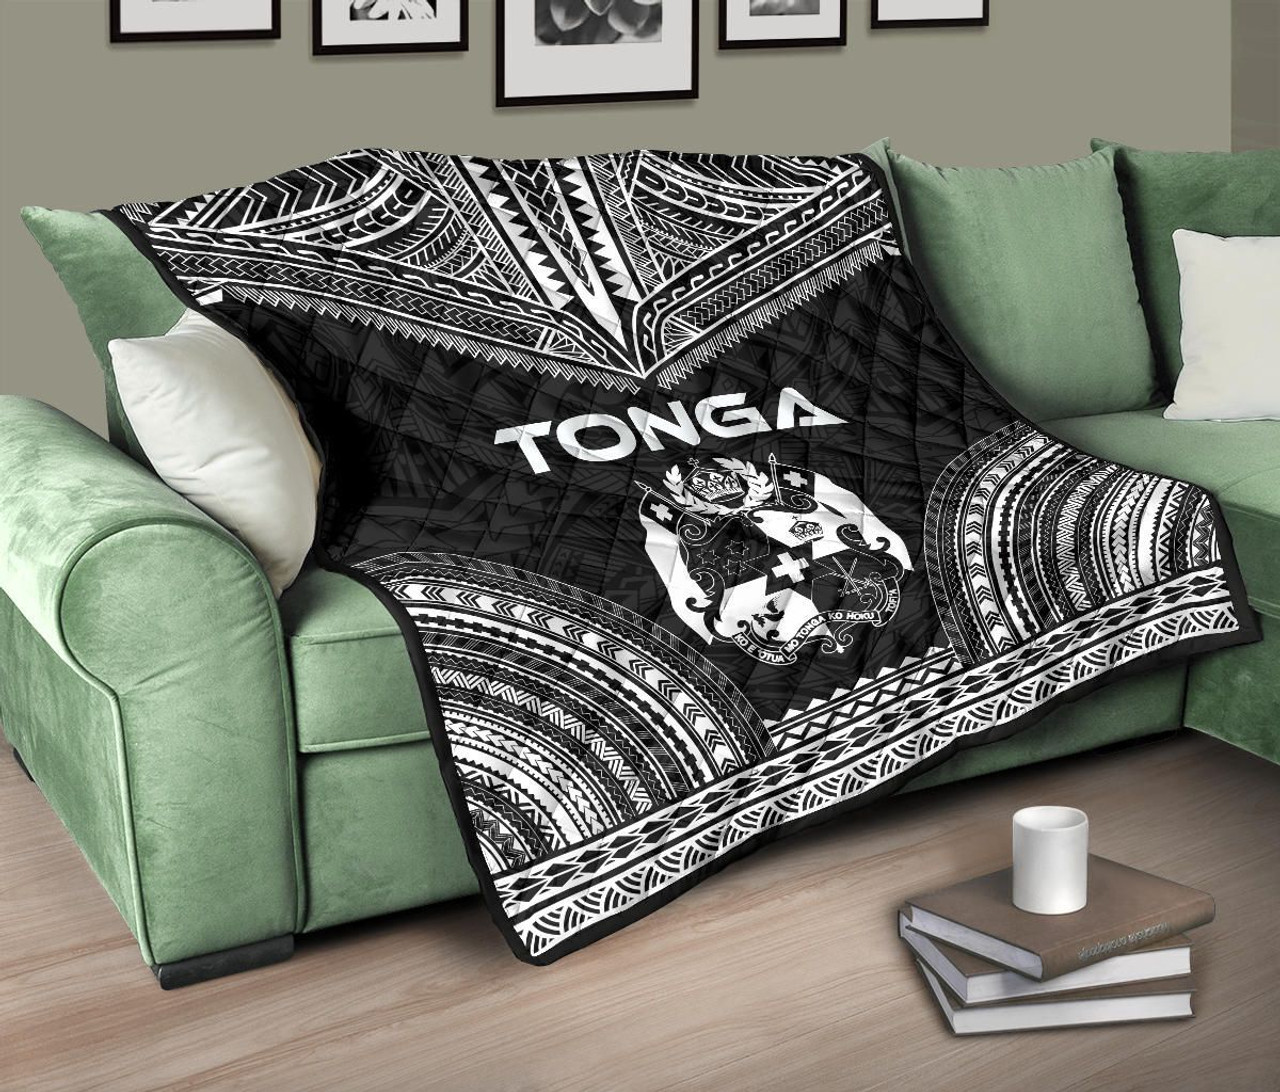 Tonga Premium Quilt - Tonga Coat Of Arms Polynesian Chief Black Version 10